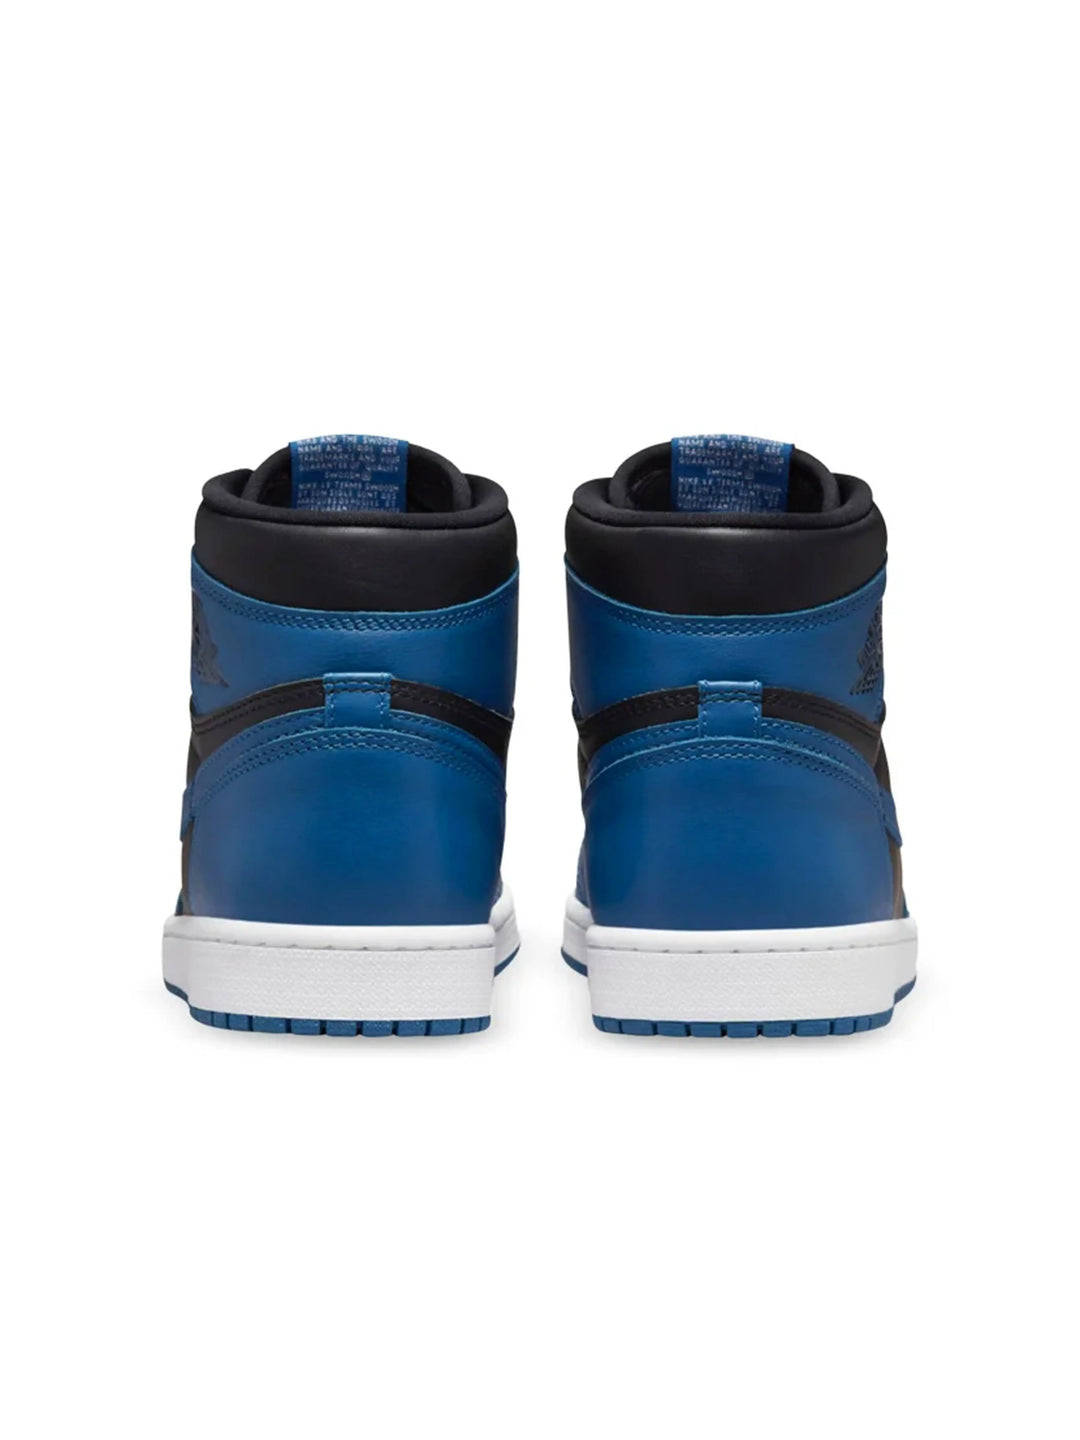 Nike Air Jordan 1 Retro High OG Dark Marina Blue Jordan Brand